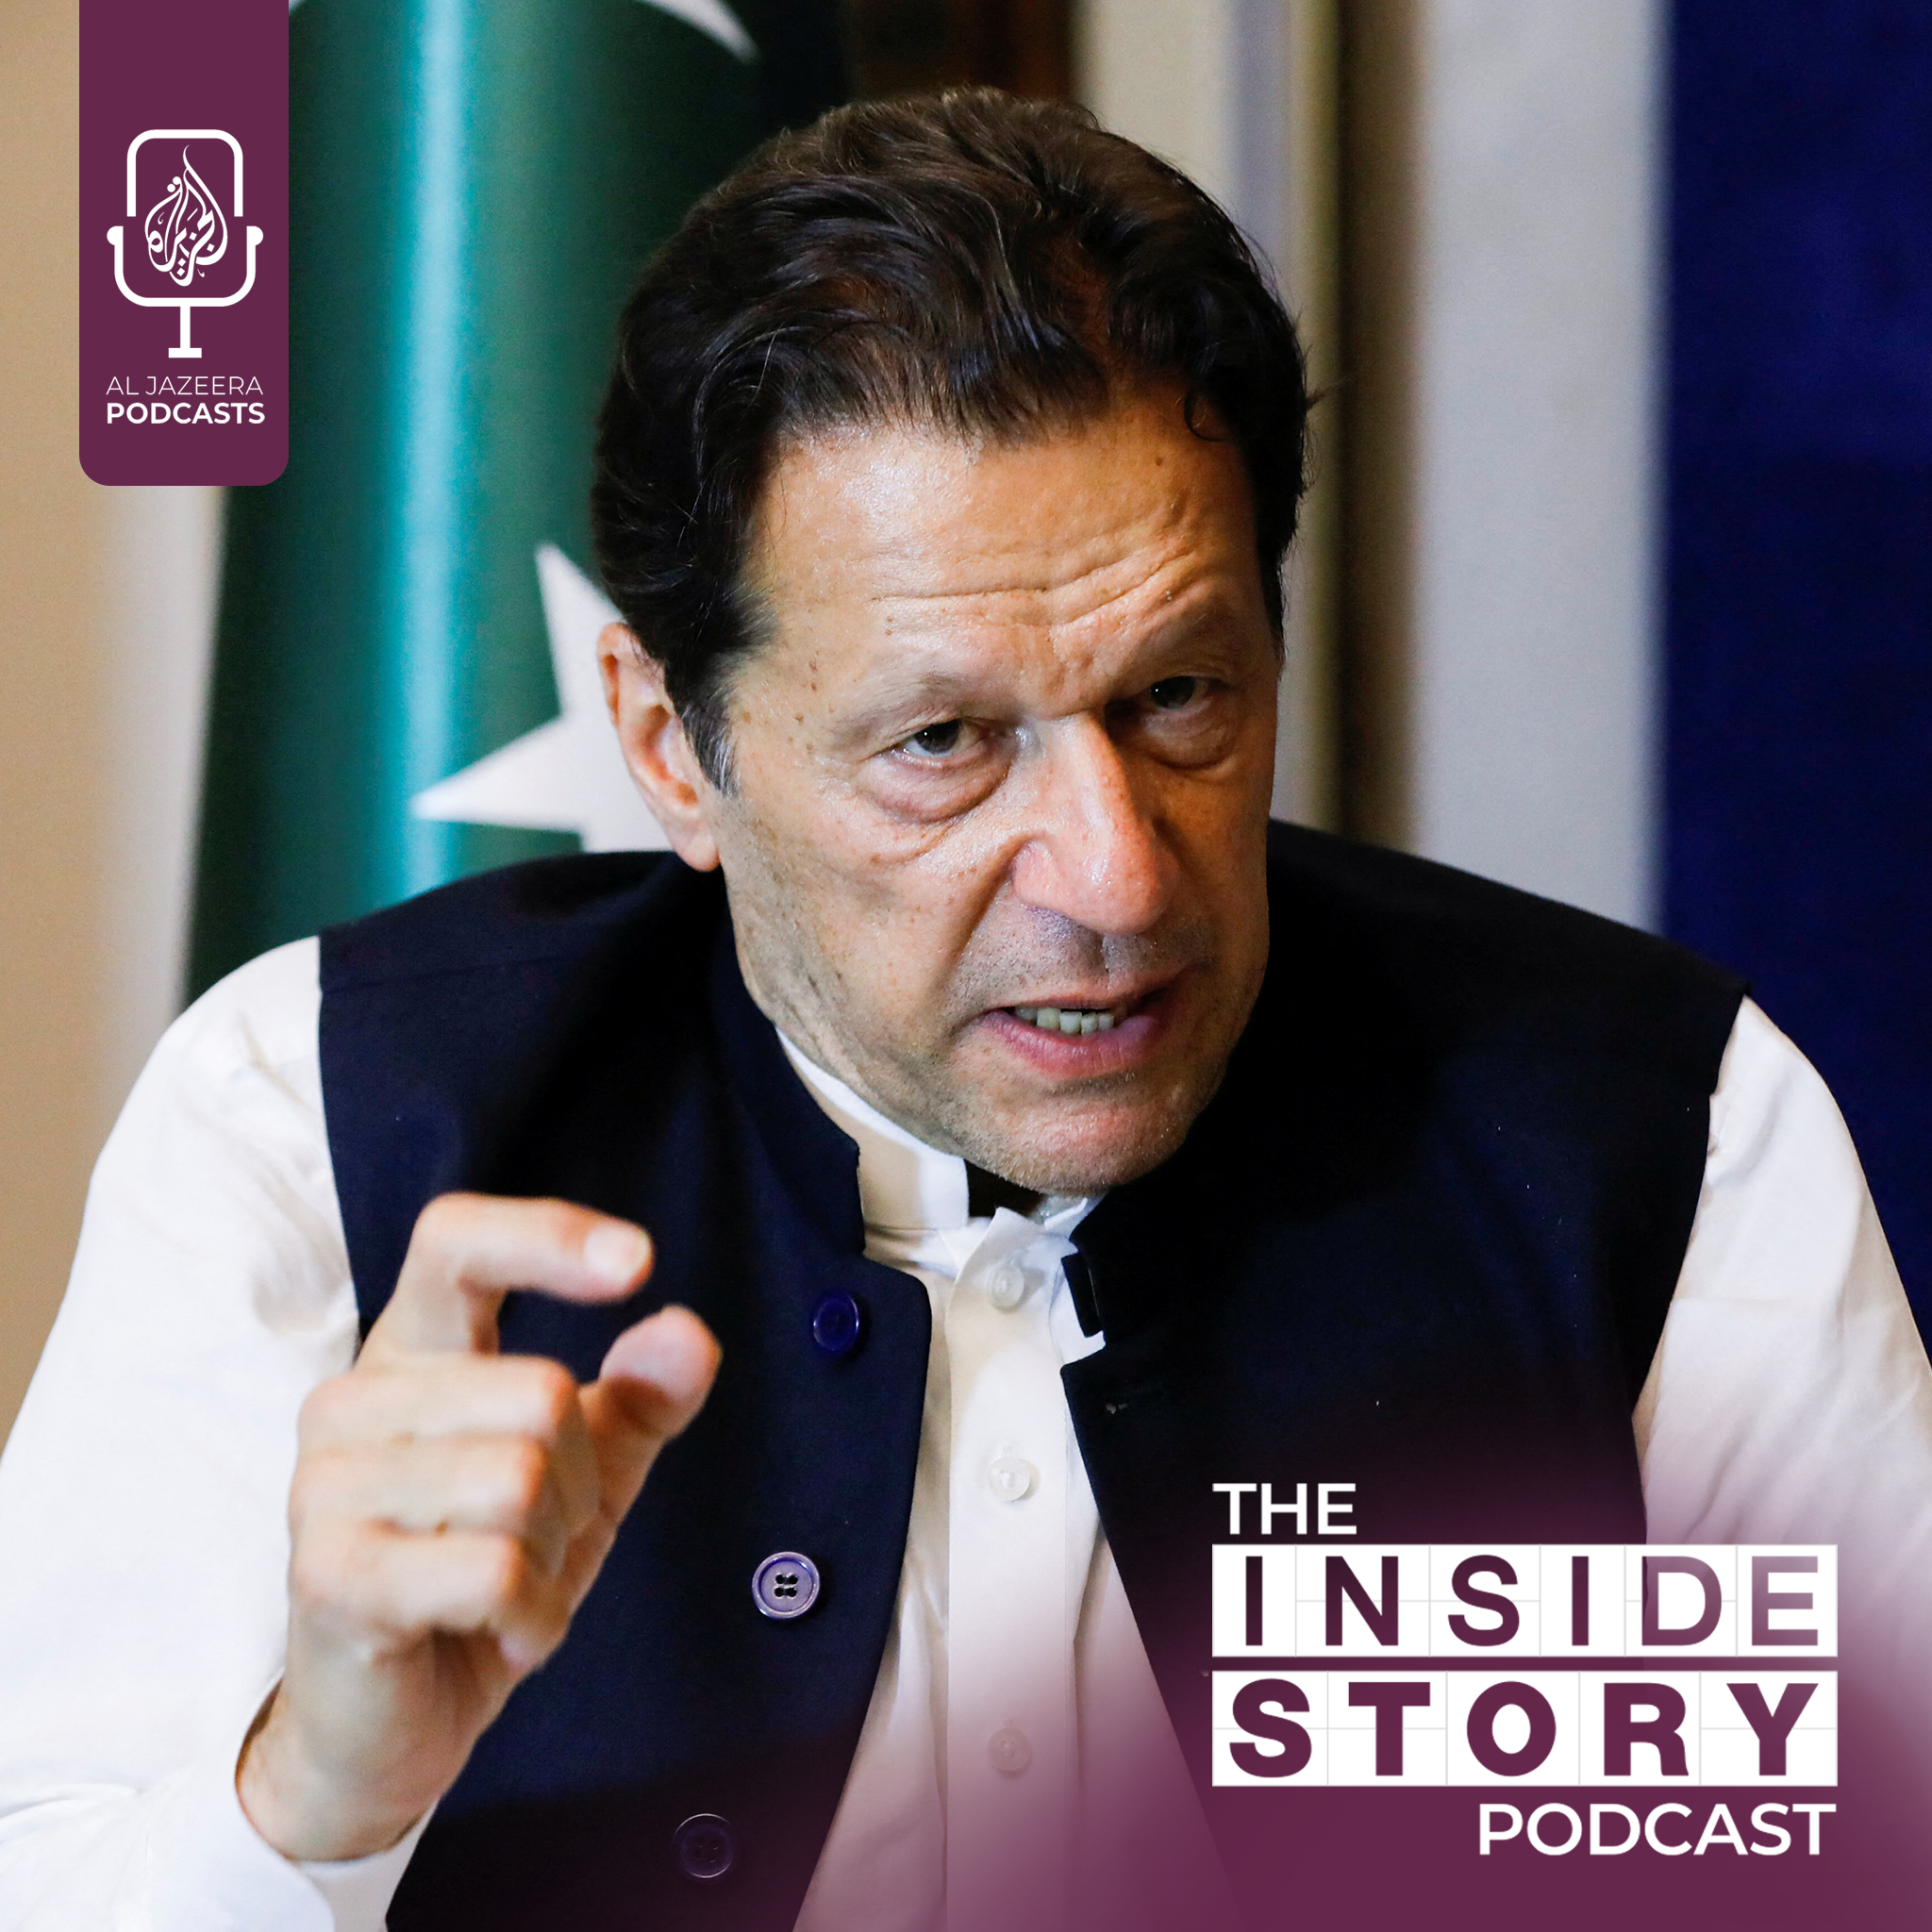 Could Imran Khan's arrest plunge Pakistan into turmoil?